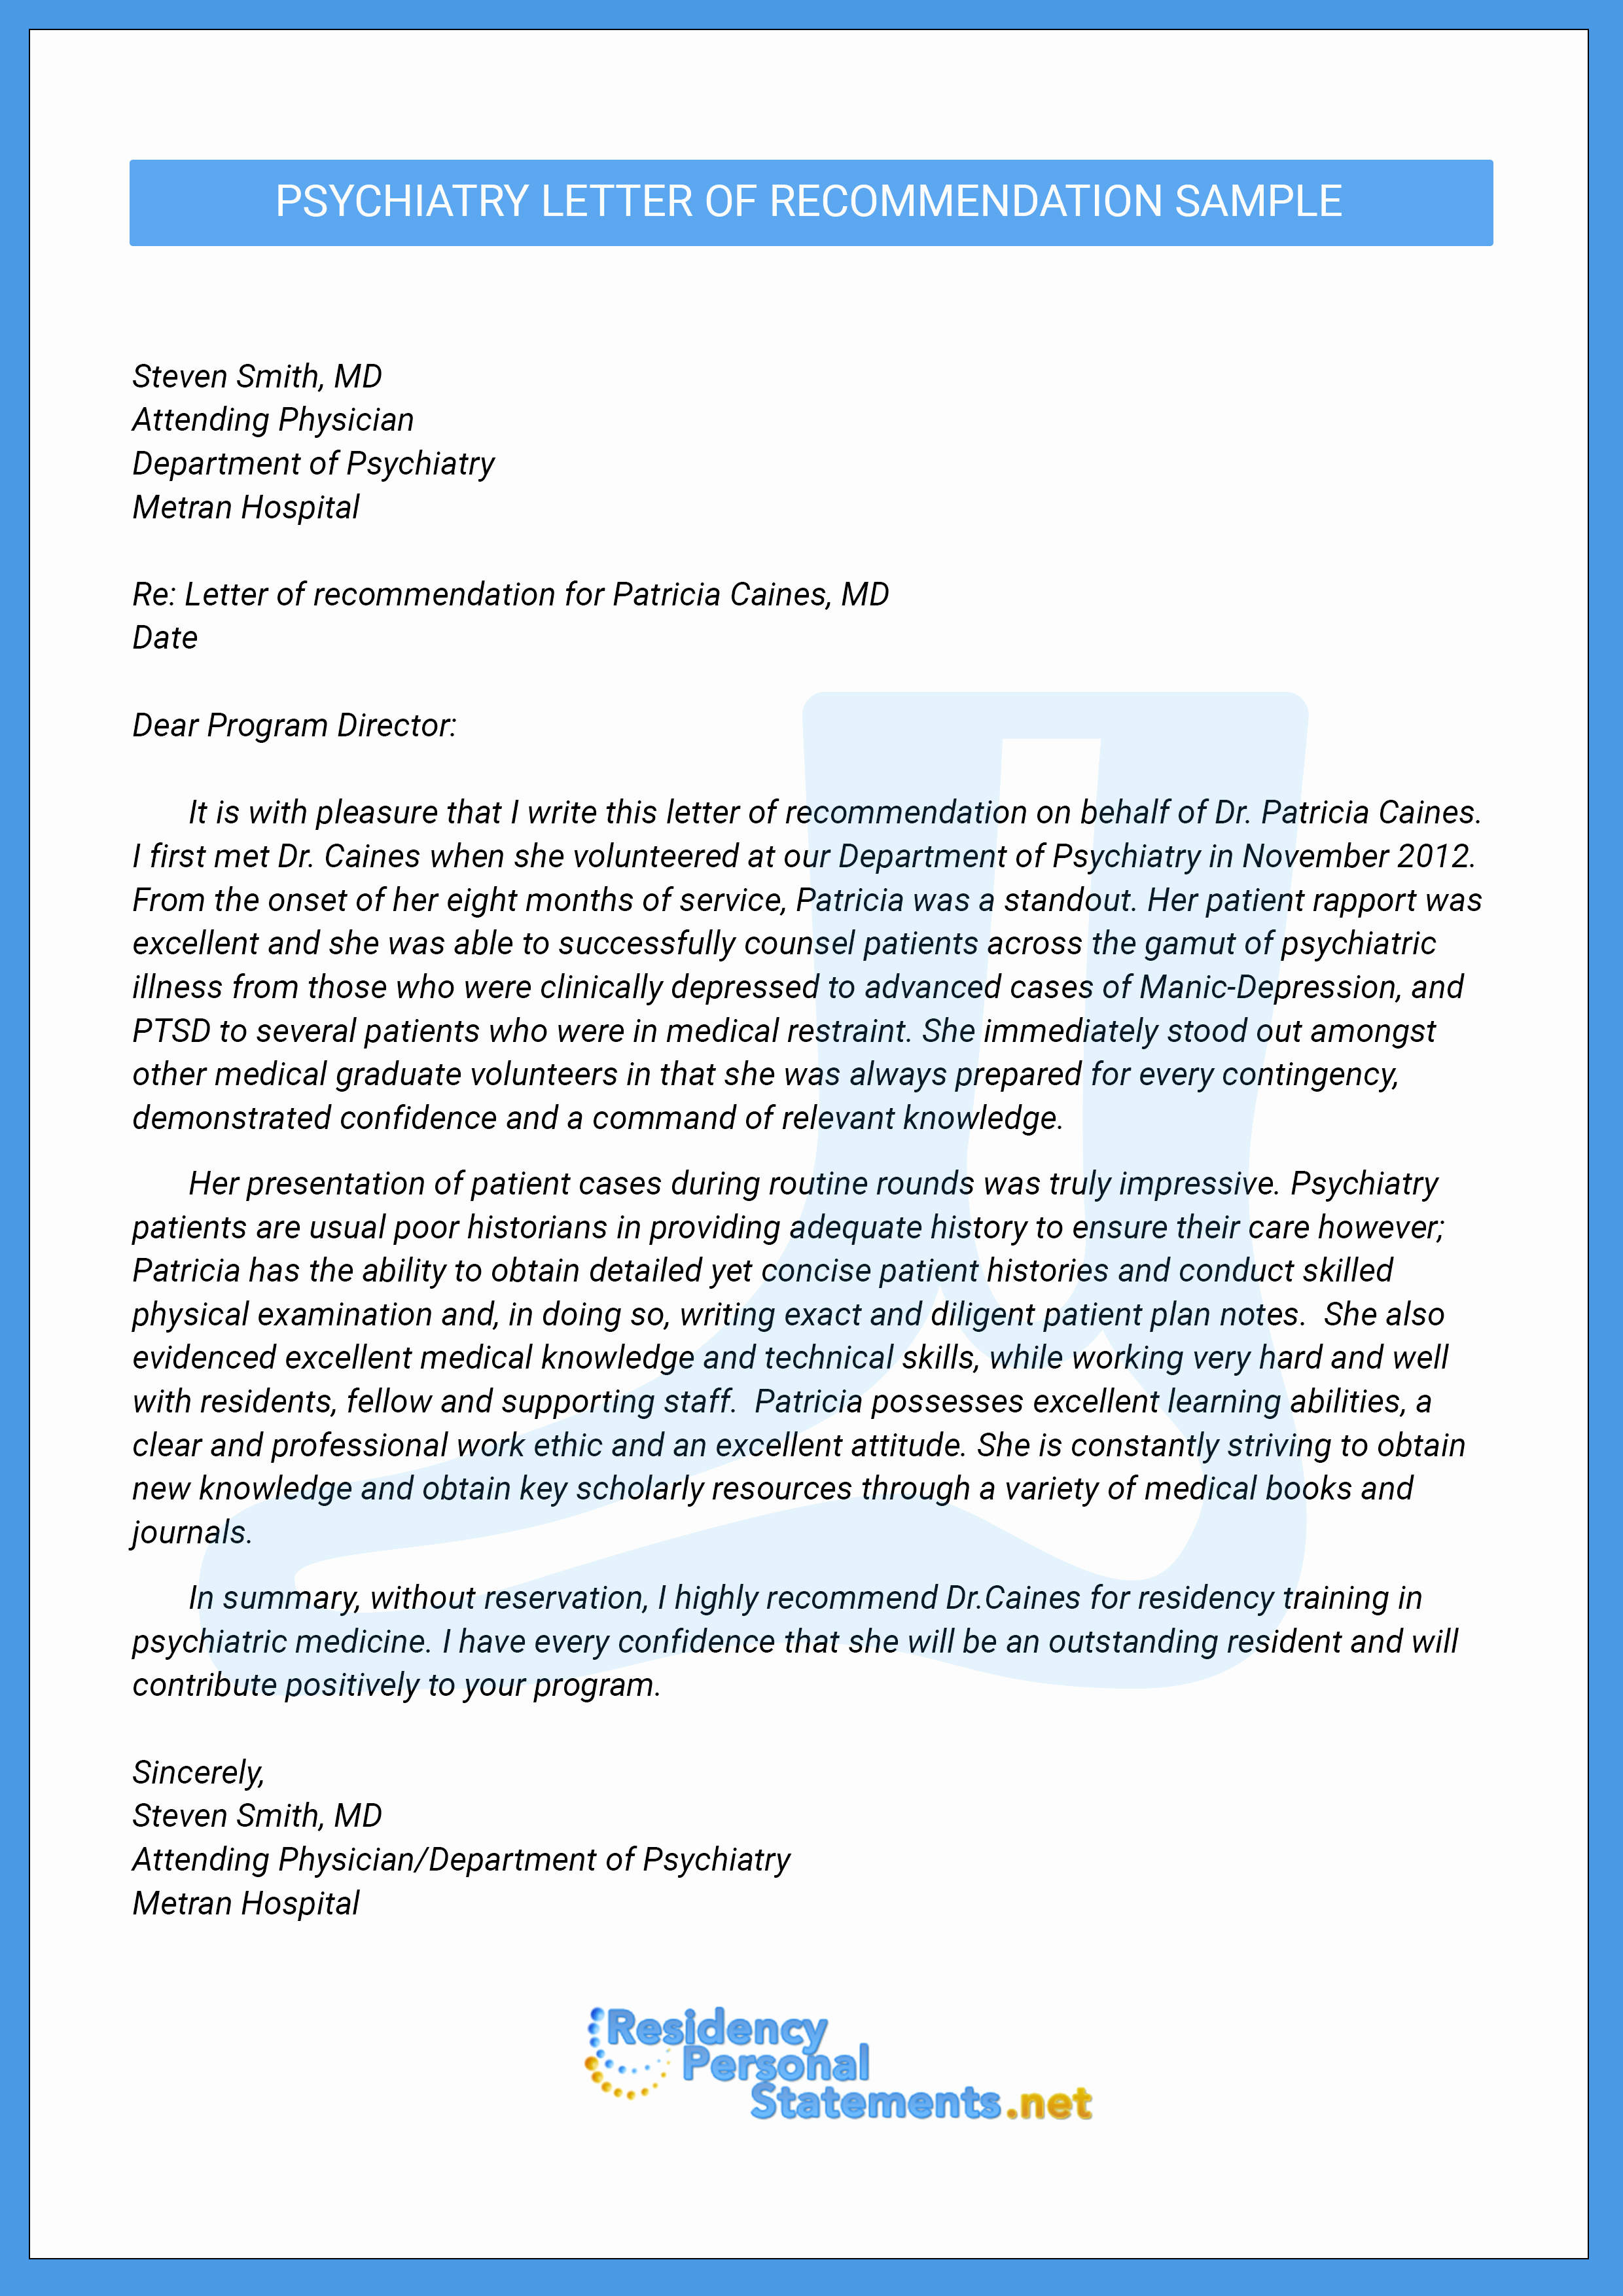 Residency Letter Of Recommendation Samples Best Of Psychiatry Residency Letter Of Re Mendation Sample